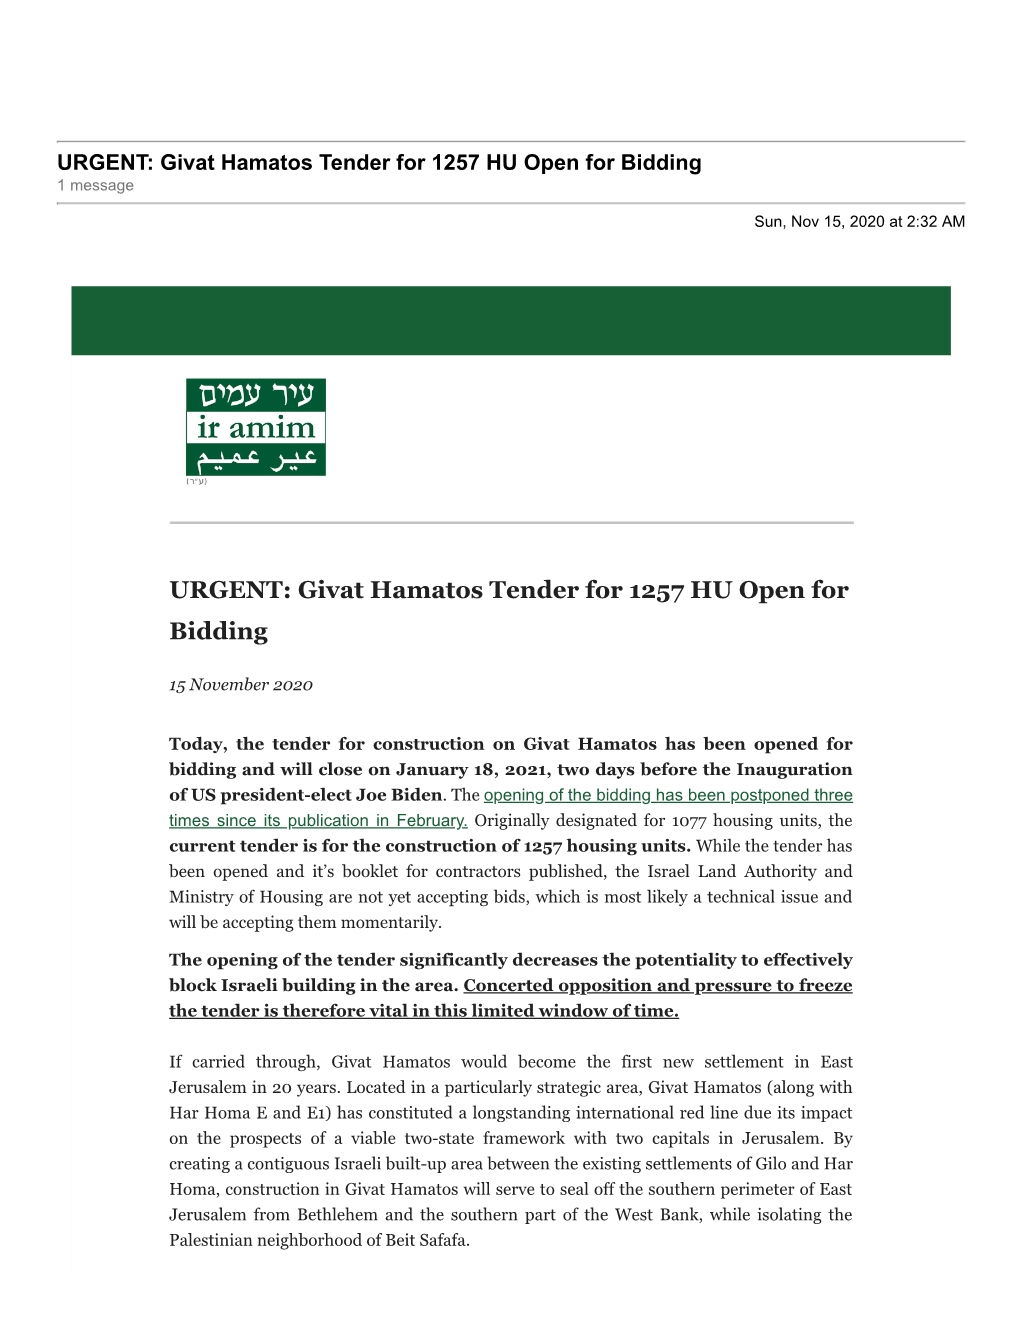 URGENT: Givat Hamatos Tender for 1257 HU Open for Bidding 1 Message